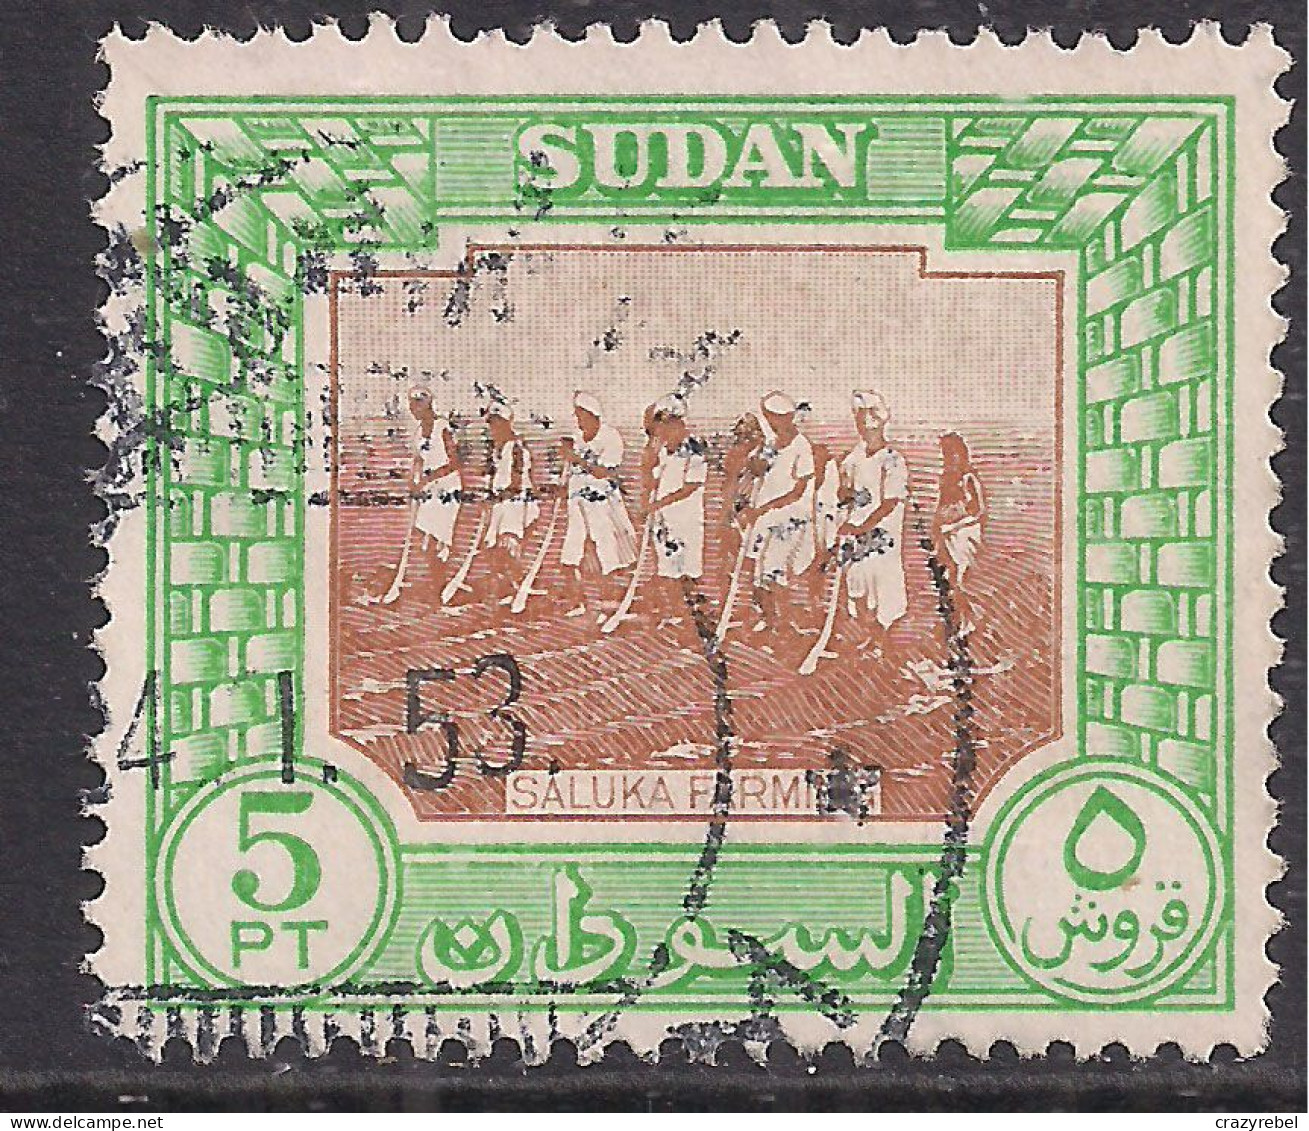 Sudan 1951 KGV1 5pt Saluka Farming Used SG 134 ( D409 ) - Soudan (...-1951)